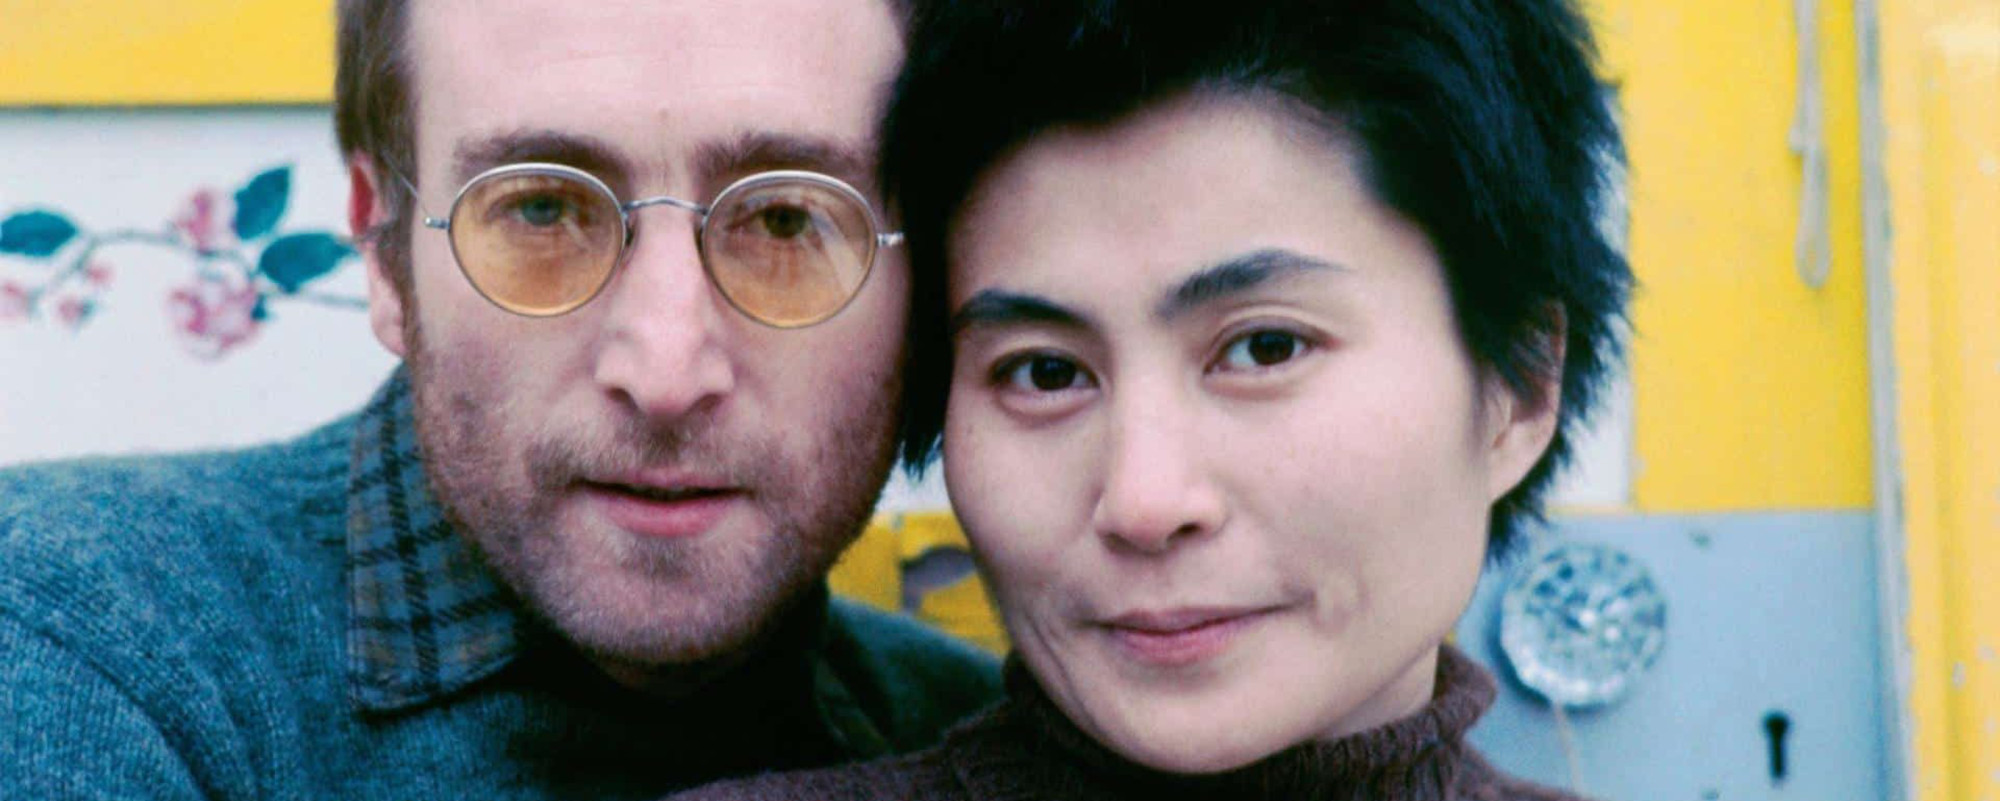 John Lennon and Yoko Ono’s Love Story in 10 Songs